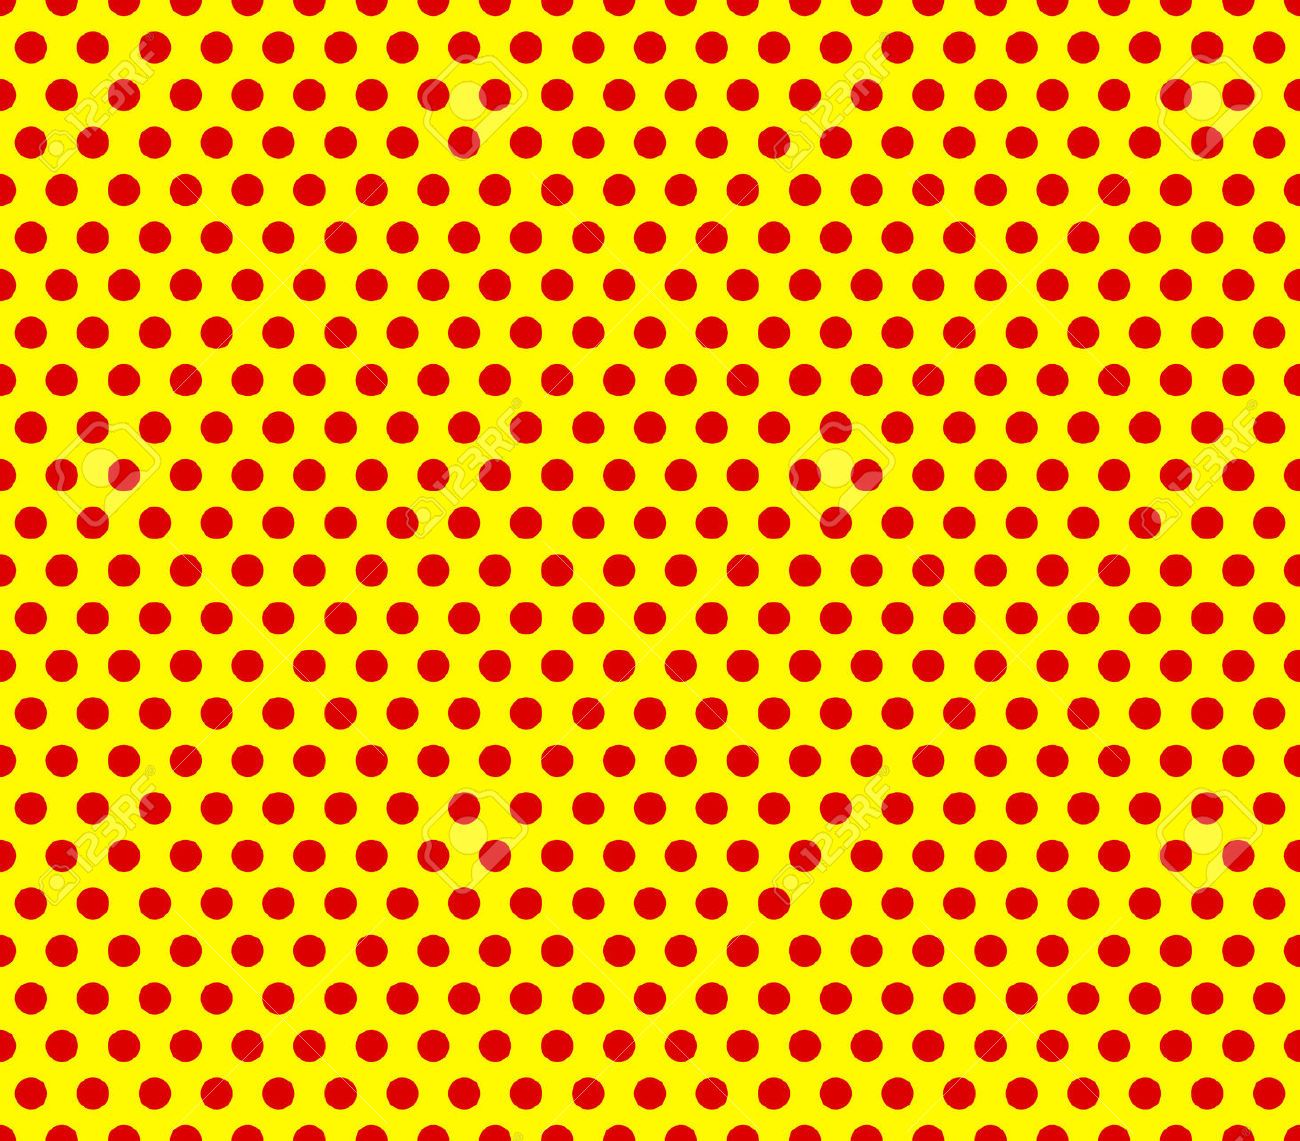 comic book polka dot vector wallpaper